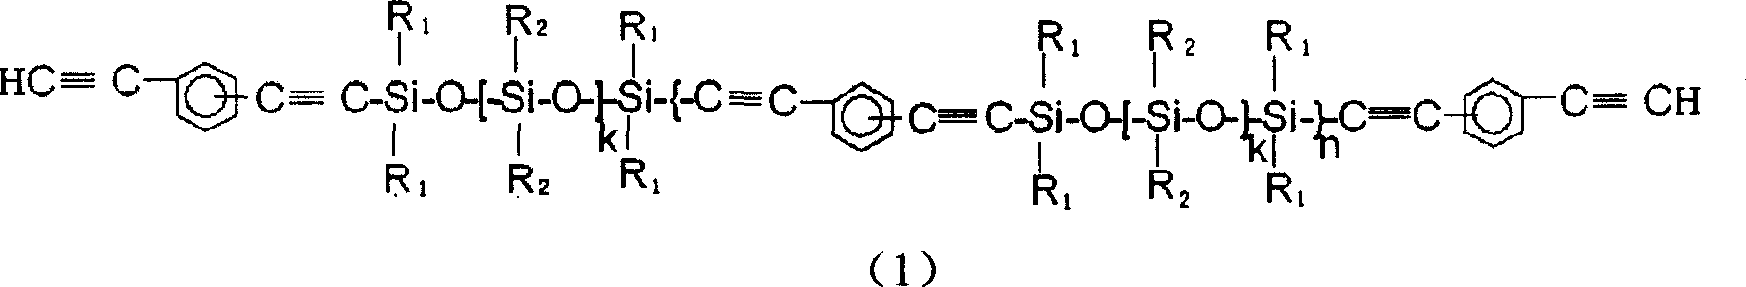 Aryne resin containing silicone